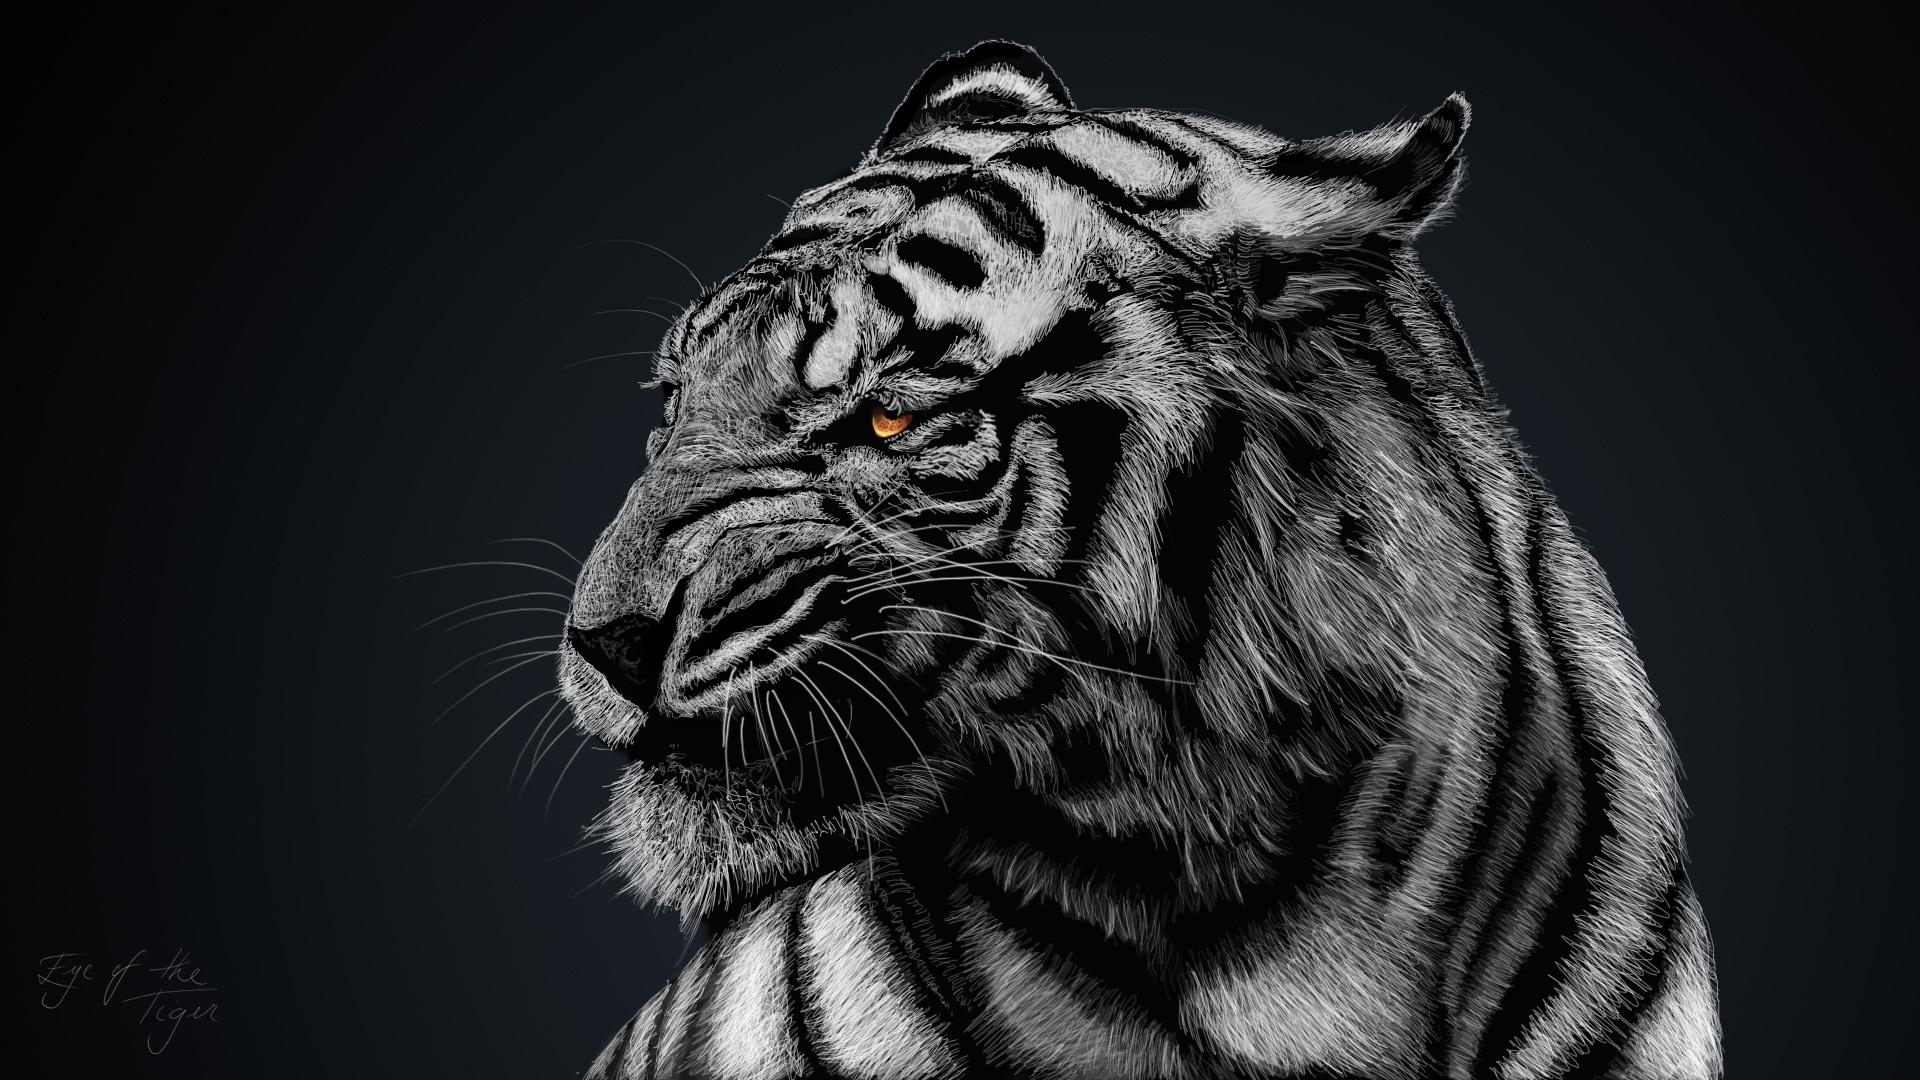 General 1920x1080 tiger animals big cats DeviantArt mammals glowing eyes simple background artwork